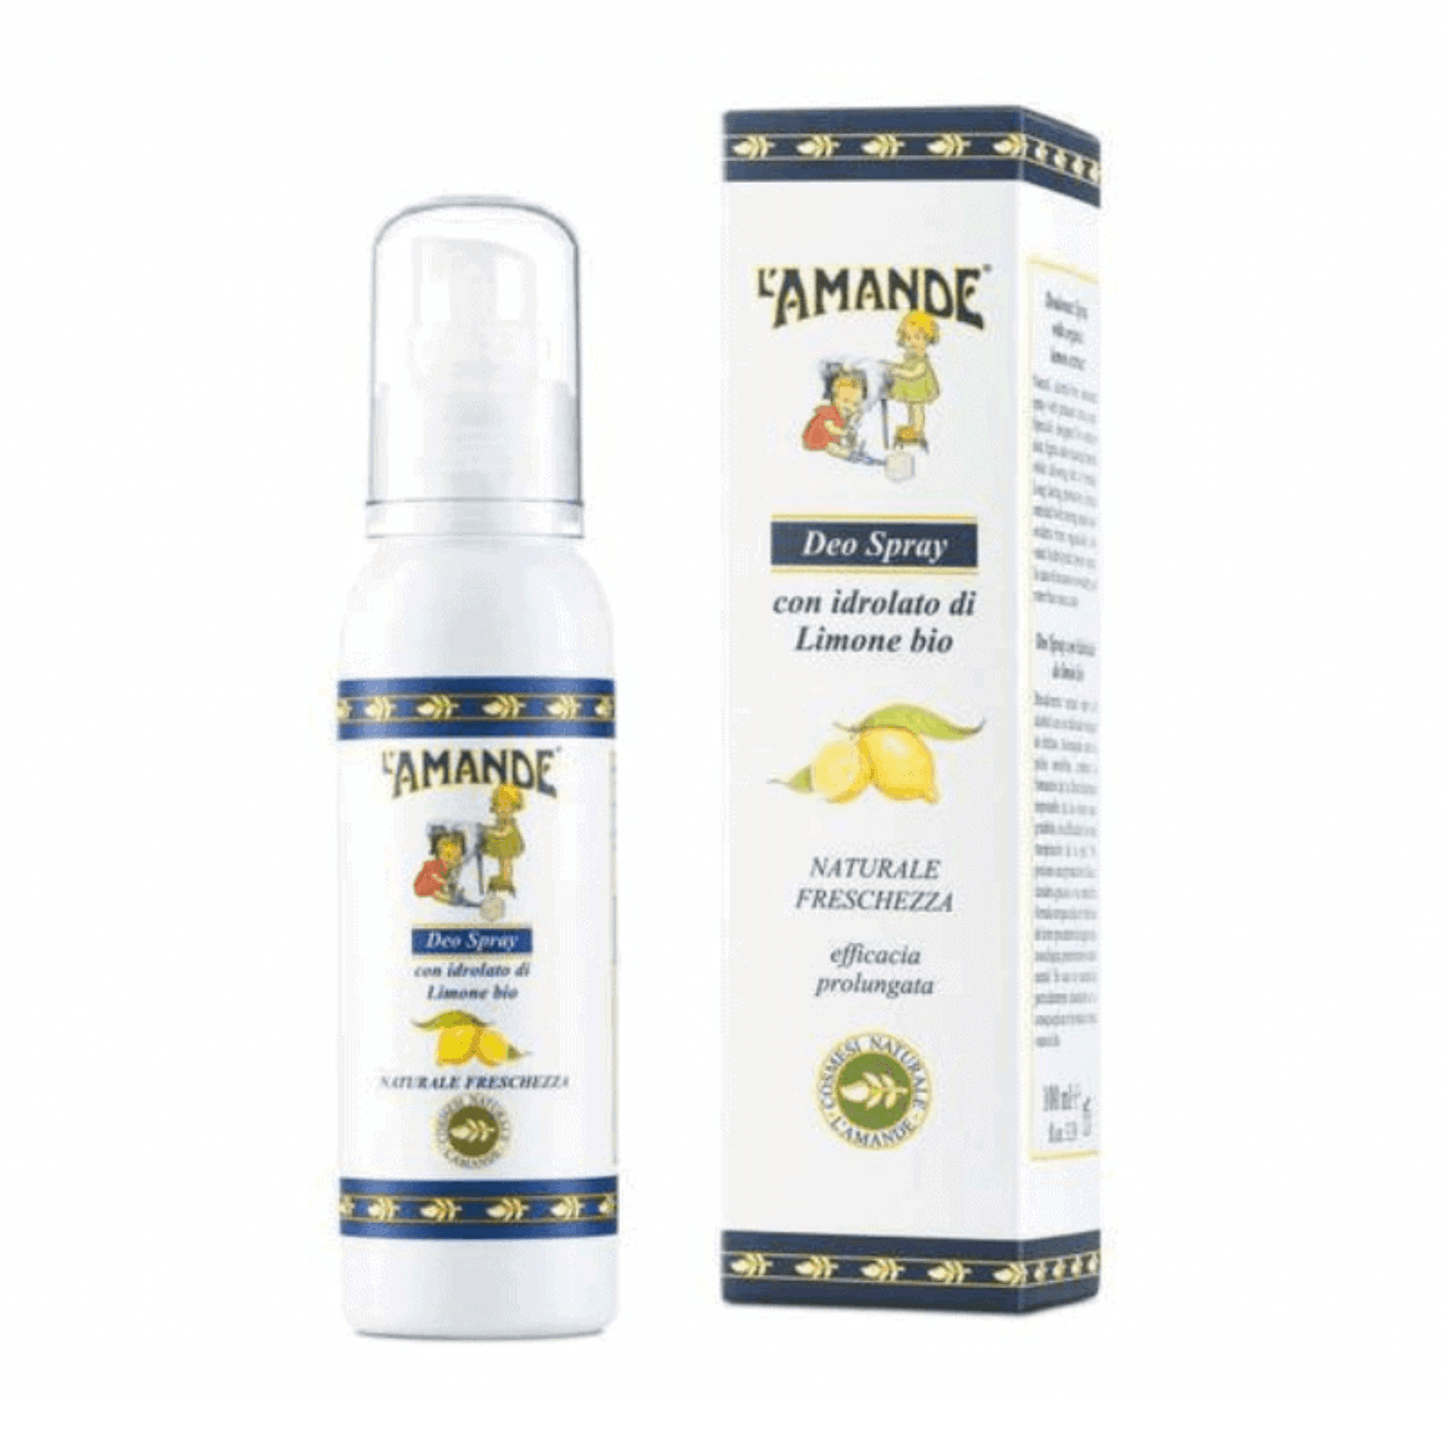 Primary Image of Spray Organic Lemon Extract Deodorant